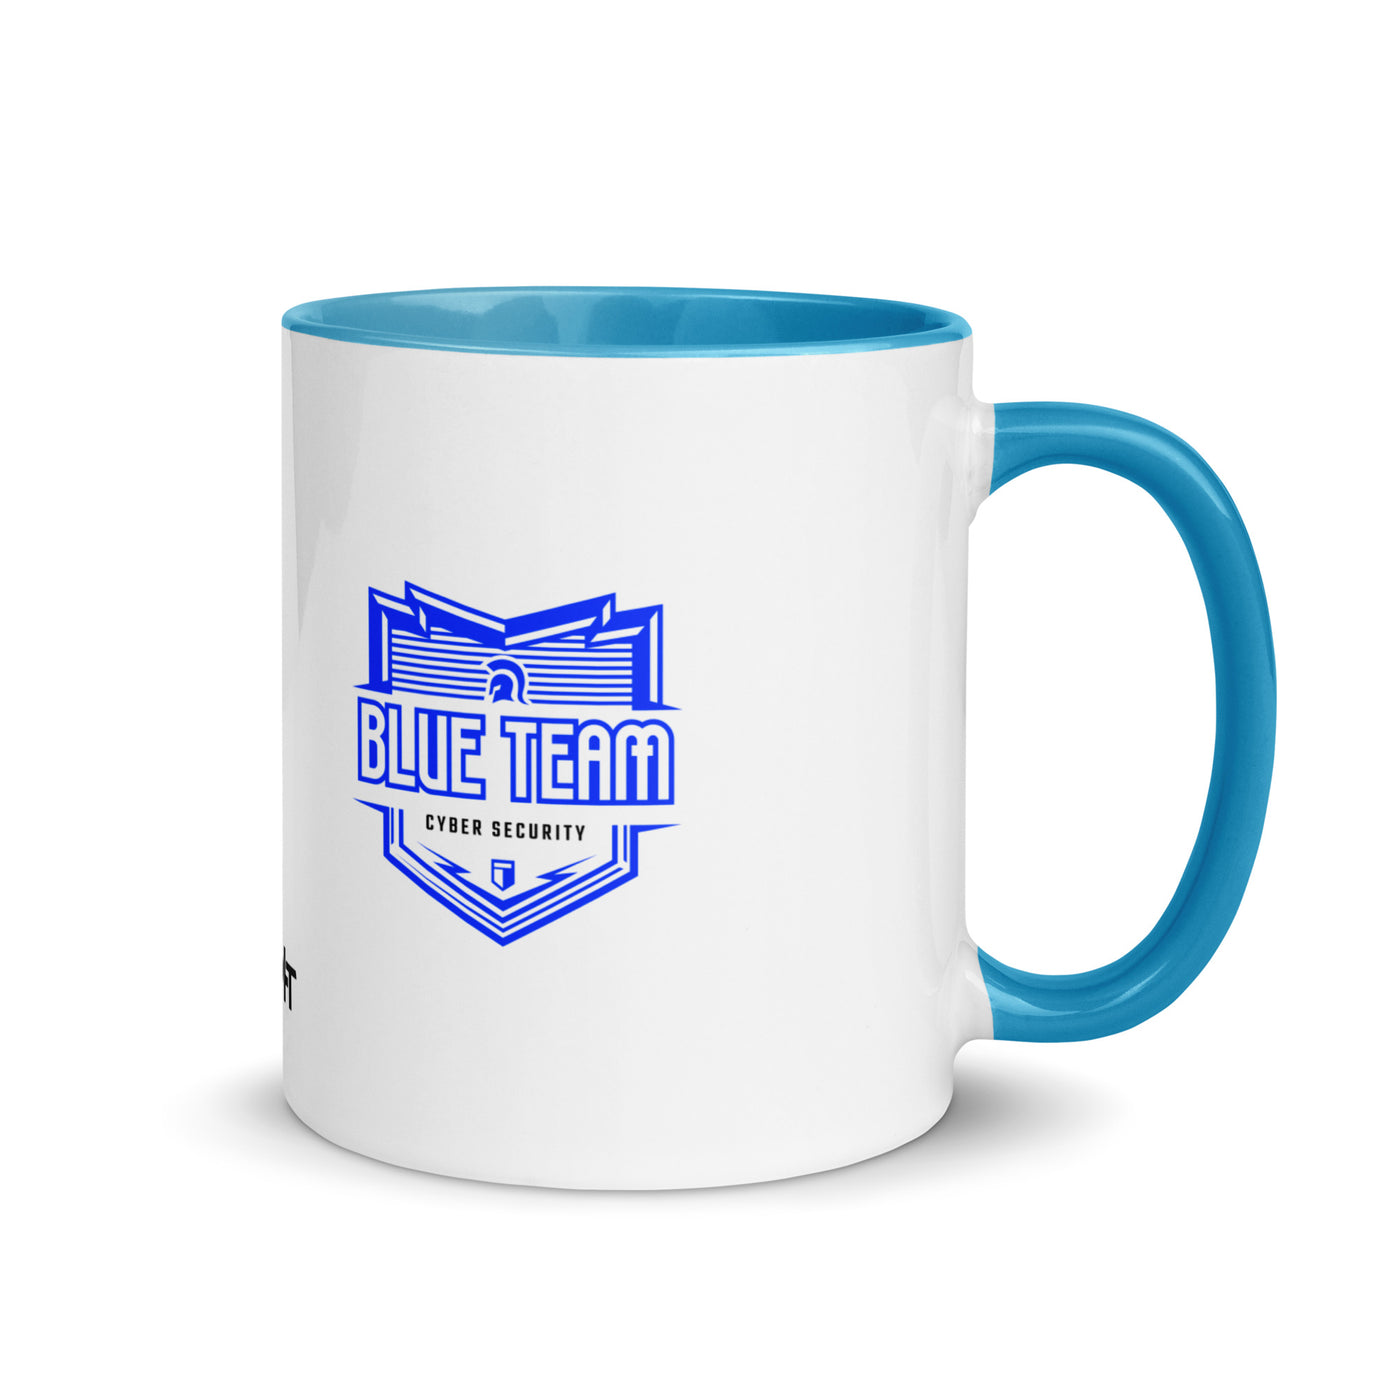 Cyber Security Blue Team 16 - Mug with Color Inside